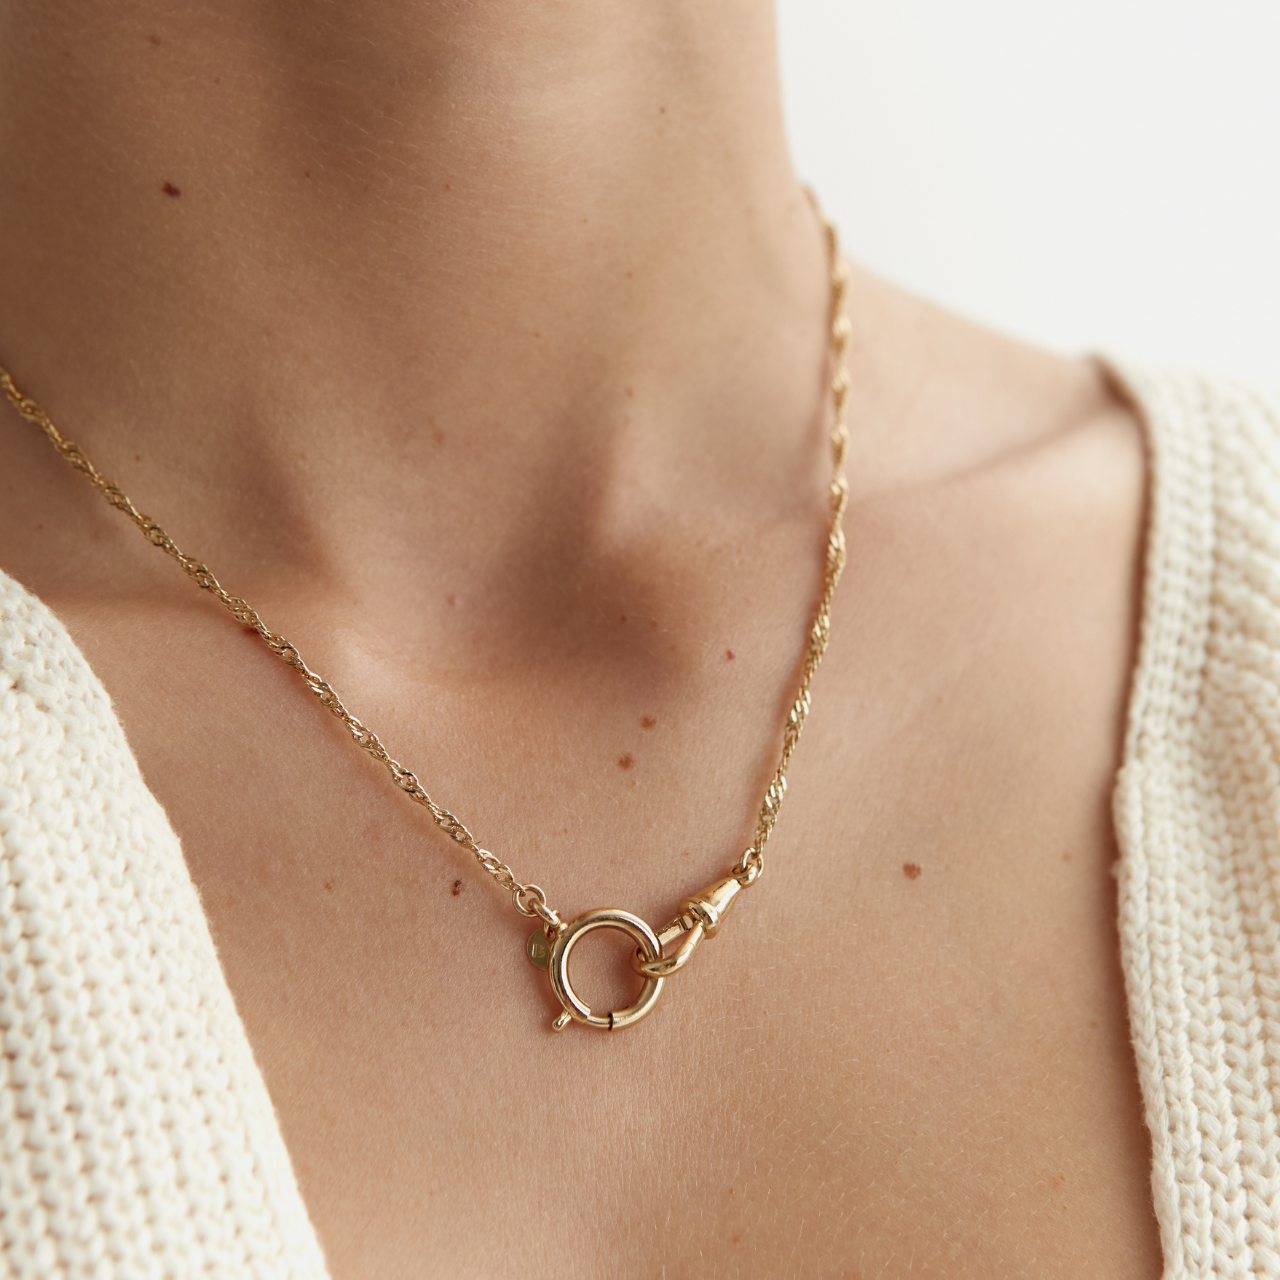 Angela Necklace - Halsketten - 24k vergoldet